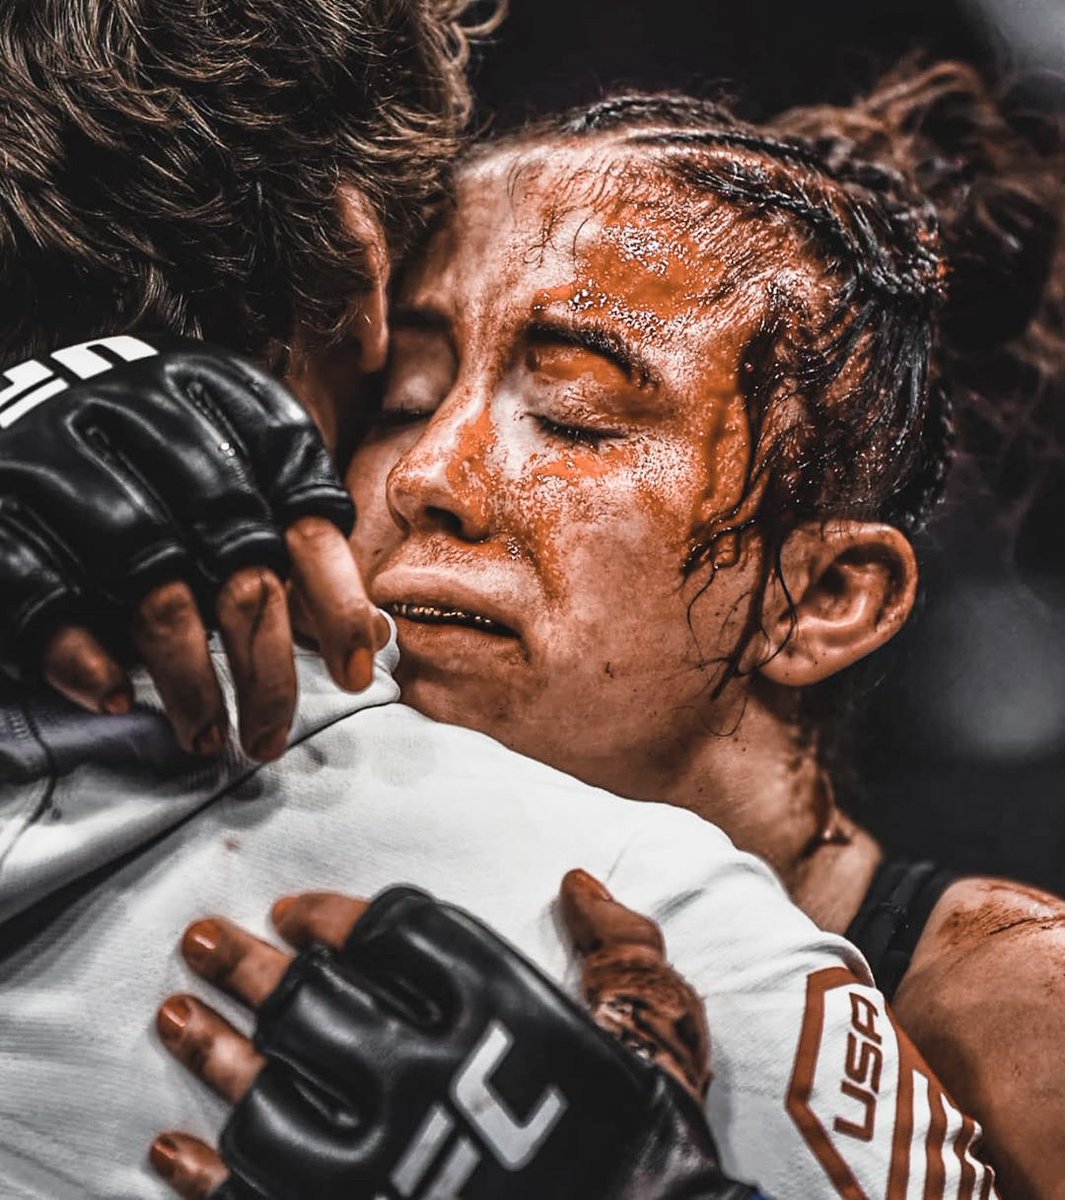 Maycee Barber’s father discredits Roxanne Modafferi’s win at UFC 246